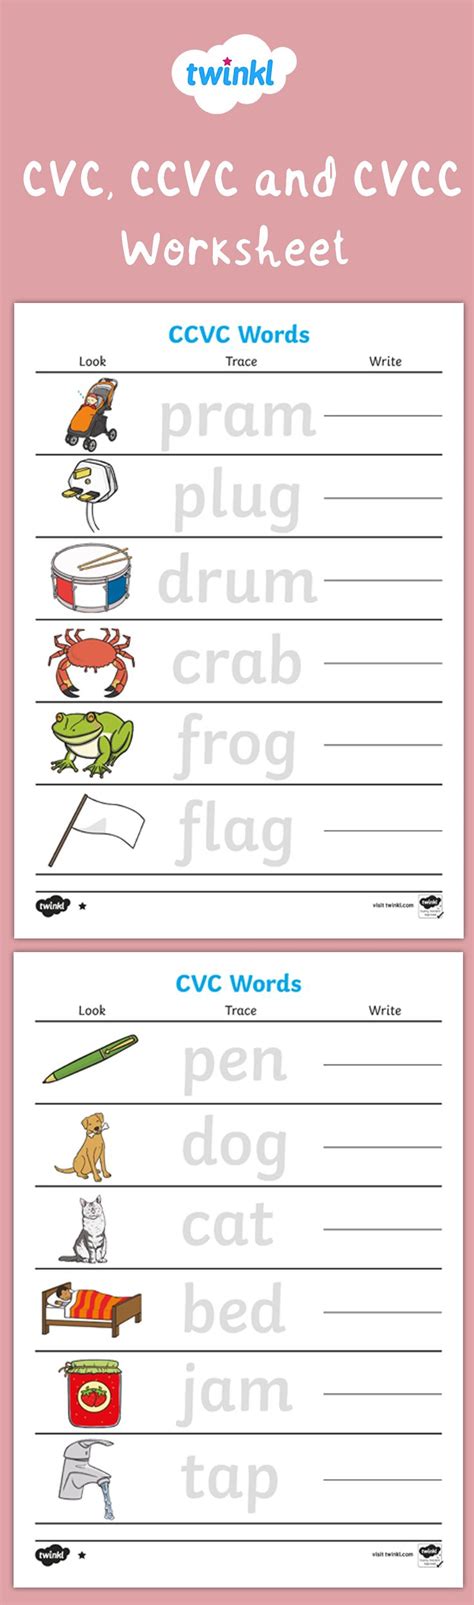 Cvc Ccvc And Cvcc Worksheet Ccvc Words Cvcc Worksheets Ccvc